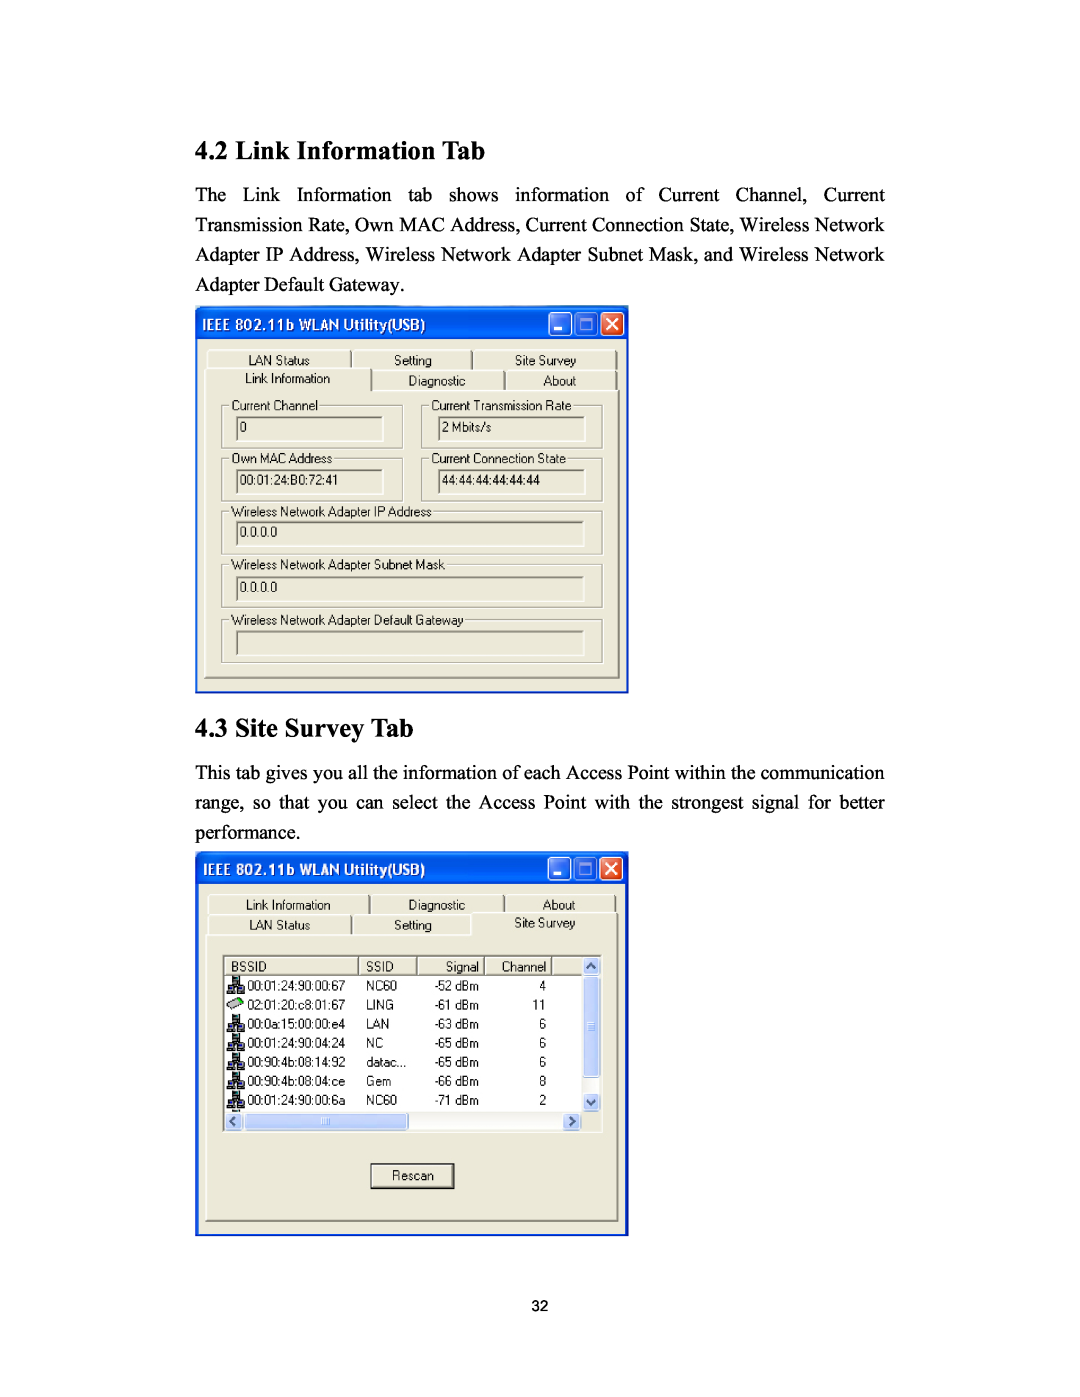 Hawking Technology H-WU300 manual Link Information Tab, Site Survey Tab 